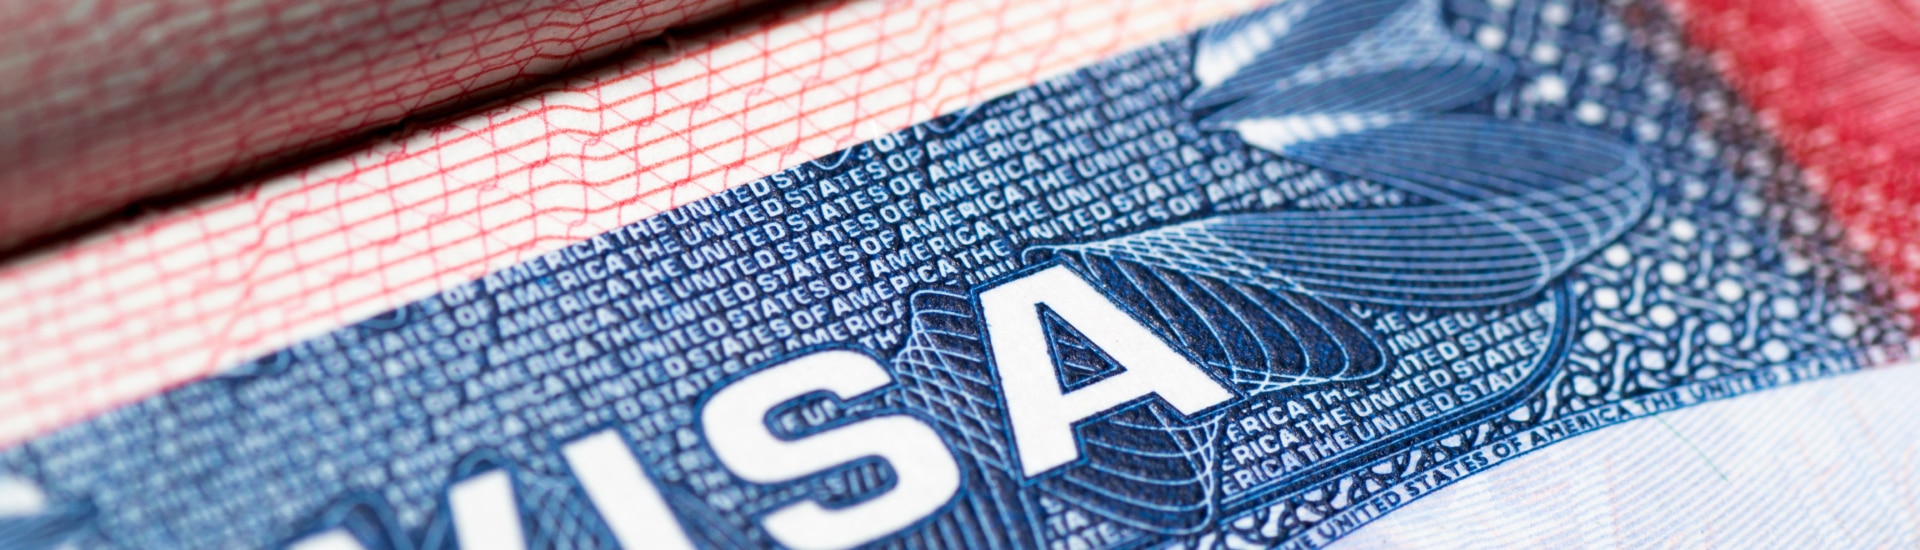 Mejores visas para emprender en USA